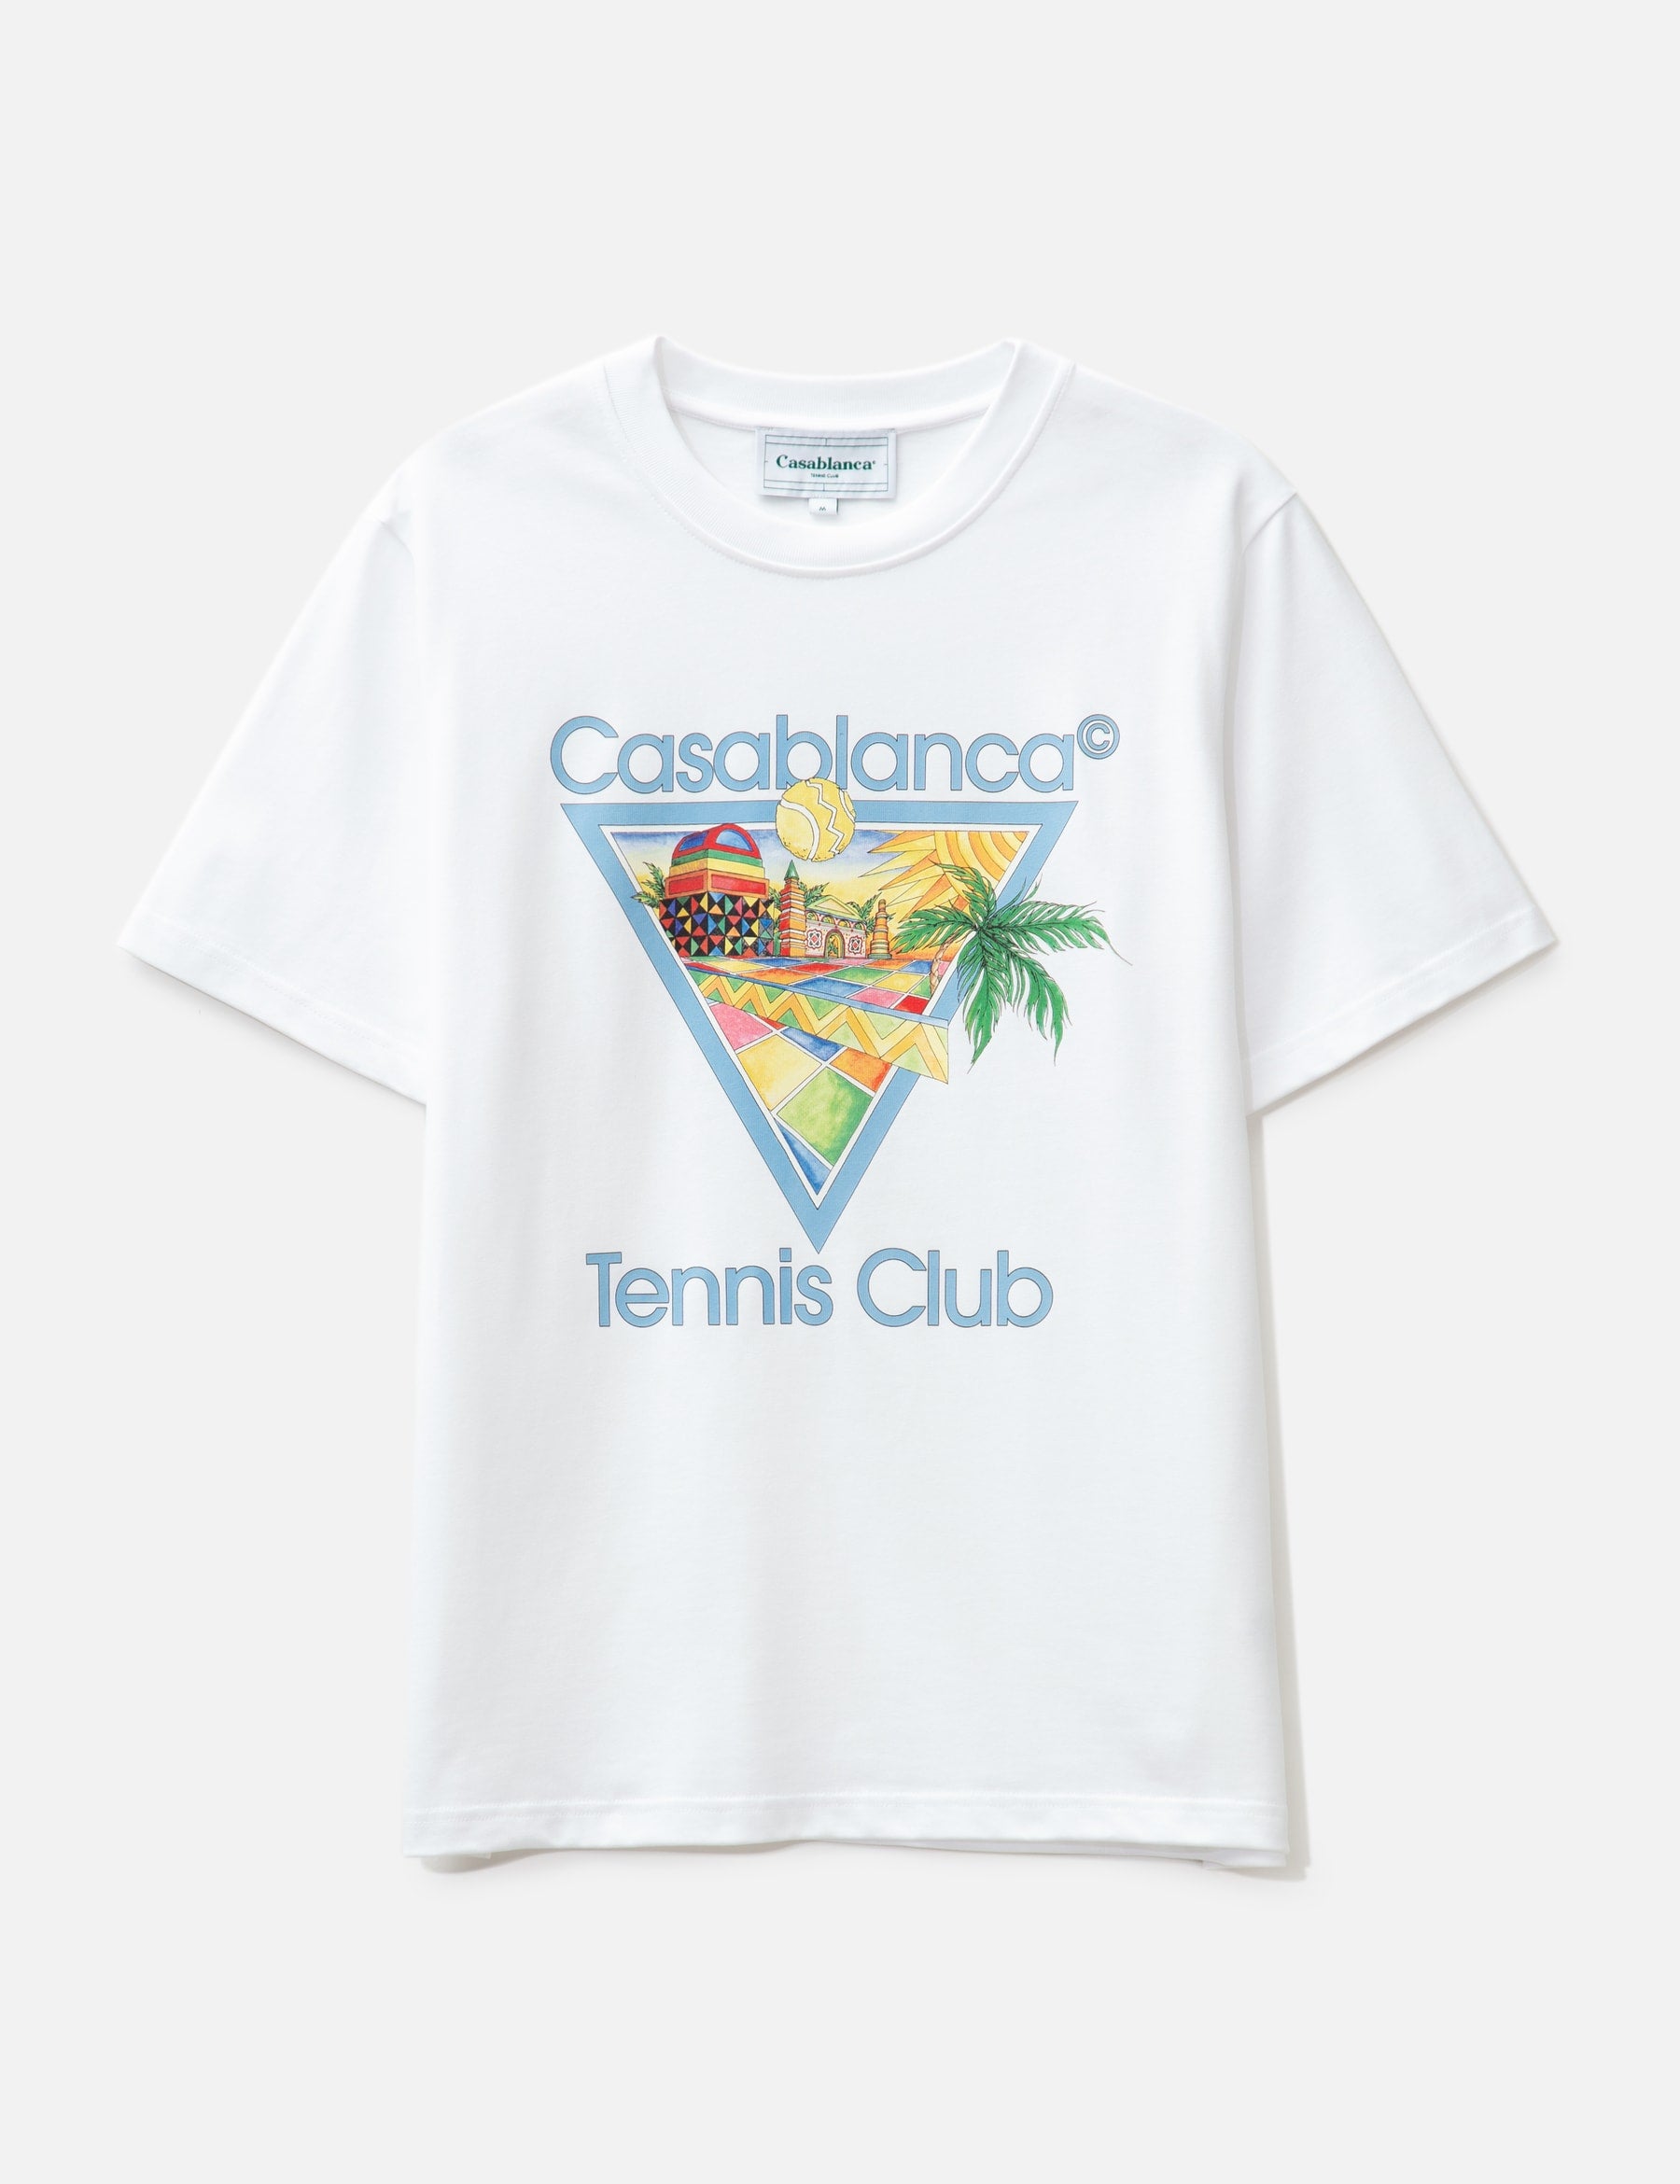 Casablanca Afro Cubism Tennis Club White T Shirt